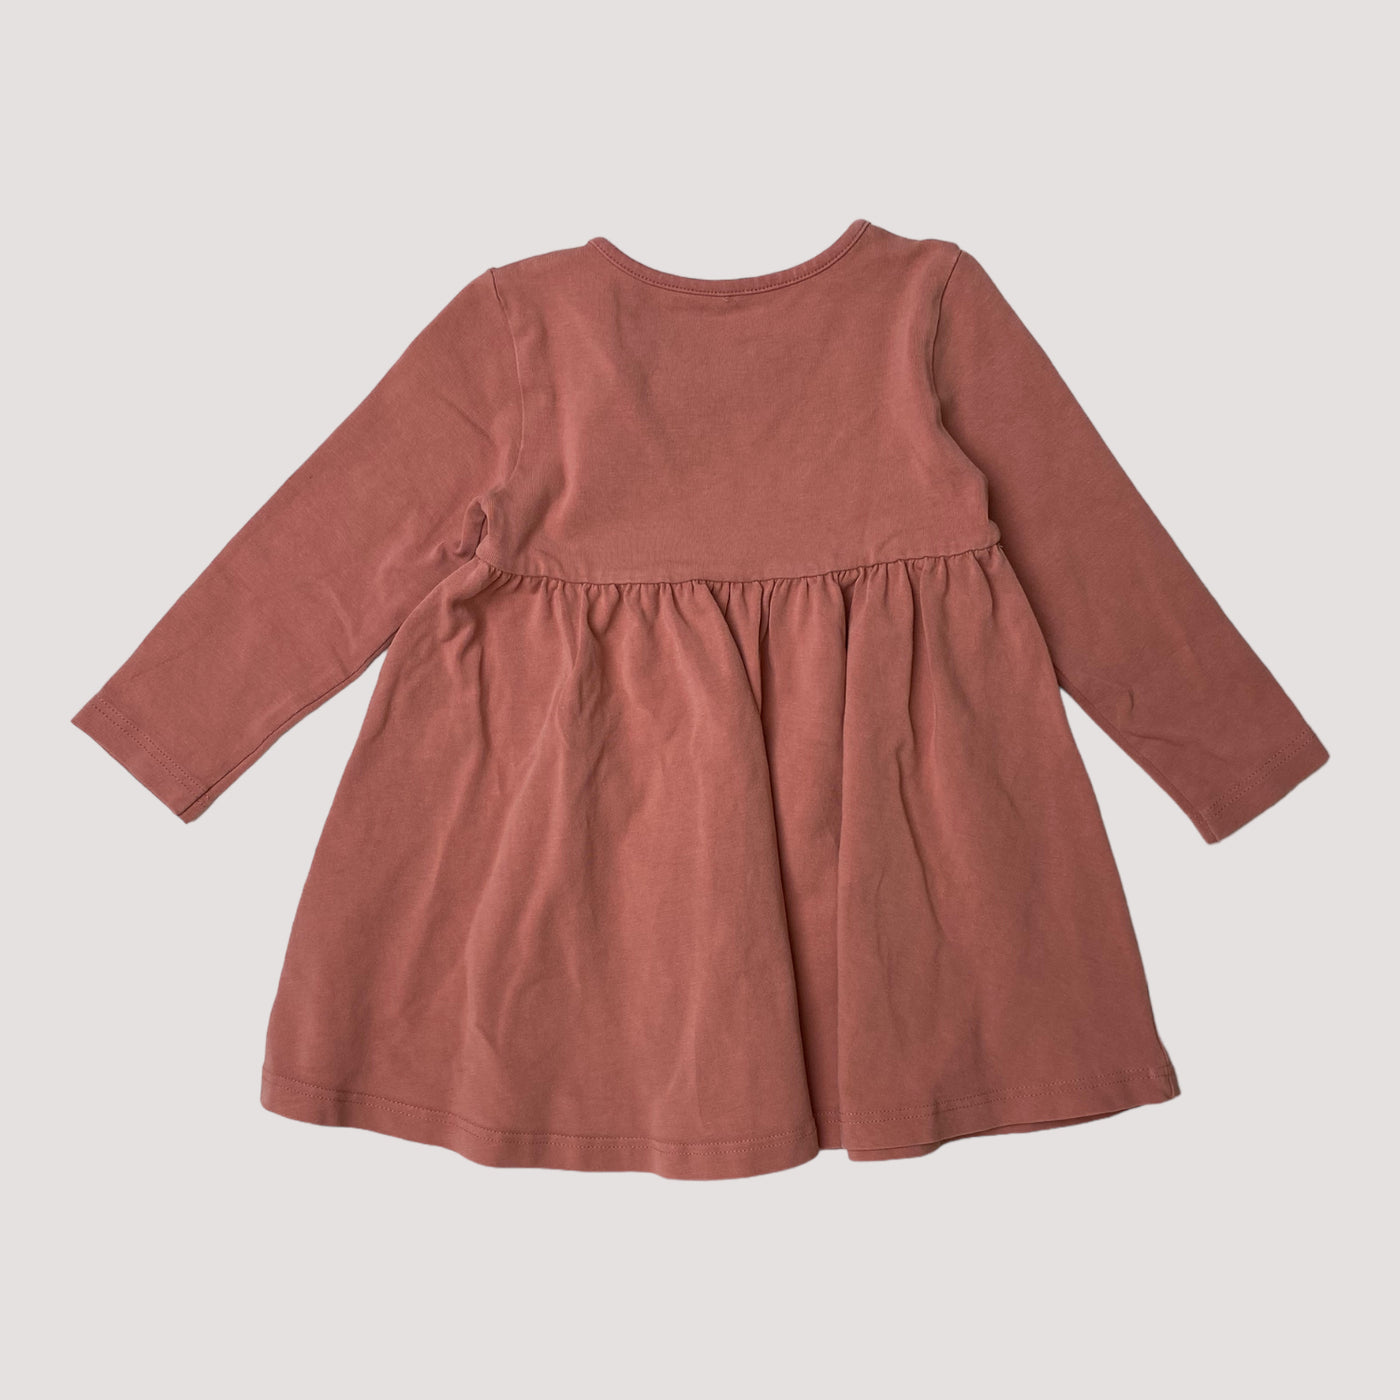 Metsola dress, pink | 86/92cm